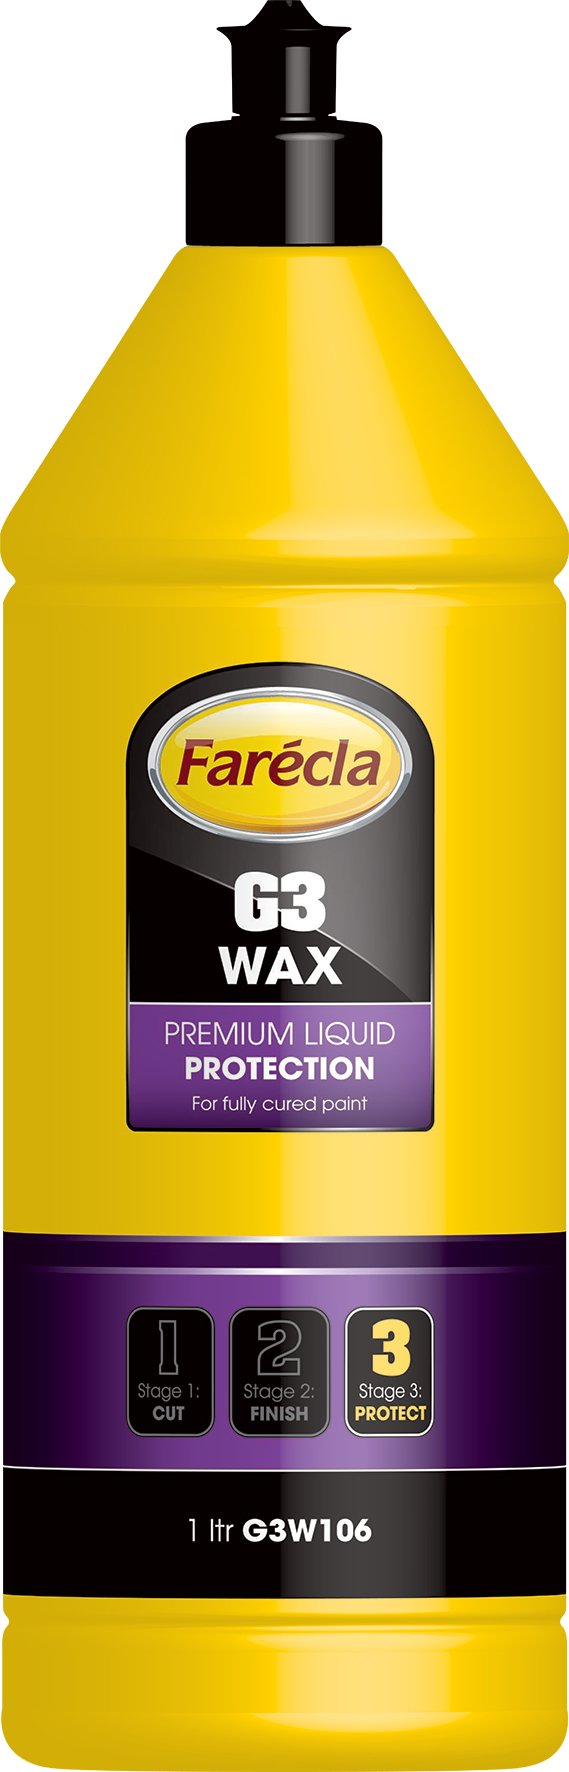 FARECLA G3W106 Wax Premium Liquid Protection, 1 Liter von Farecla